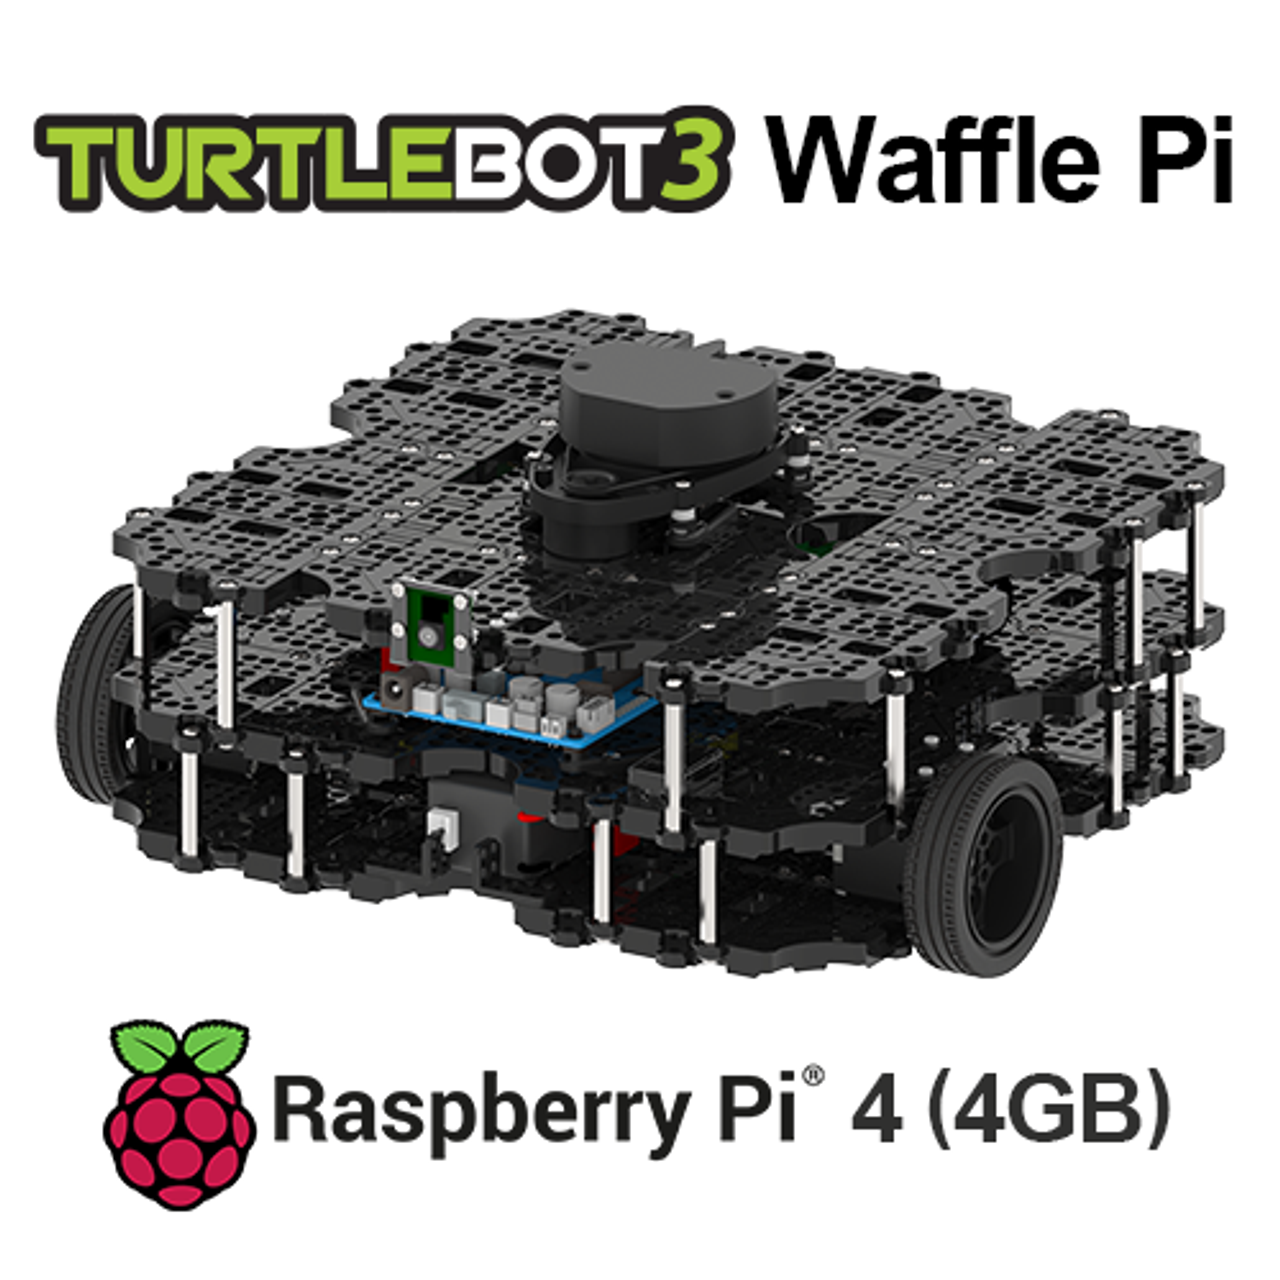 901-0119-302 TurtleBot 3 Waffle Pi RPi4 4GB [US]